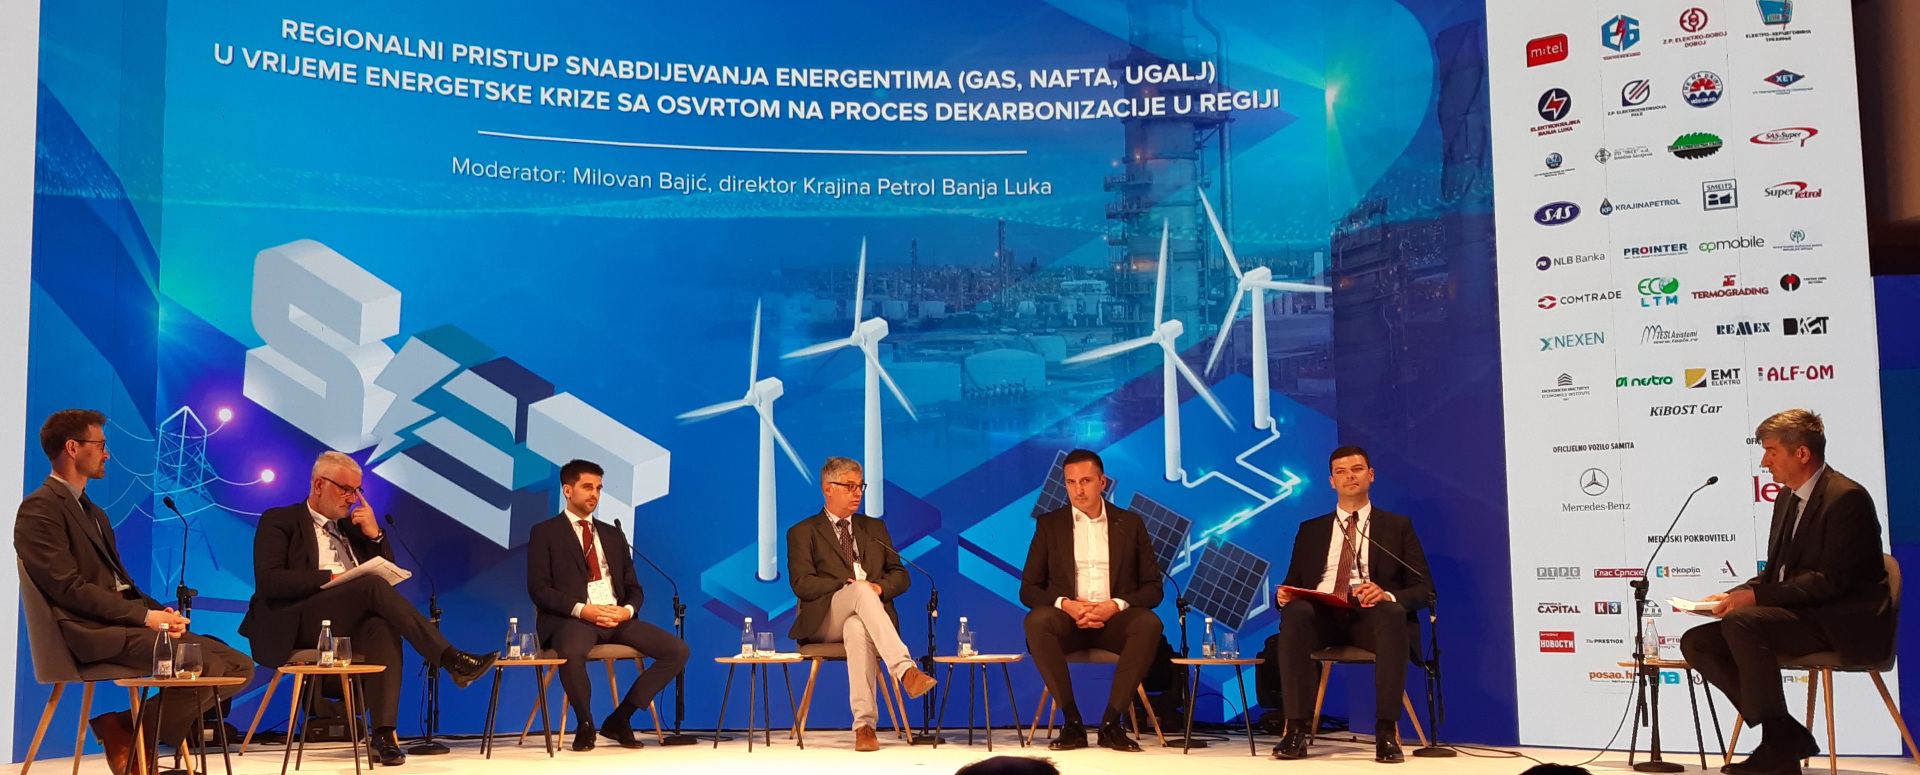 NPCS at the Energy Summit “SET- TREBINJE 2023“